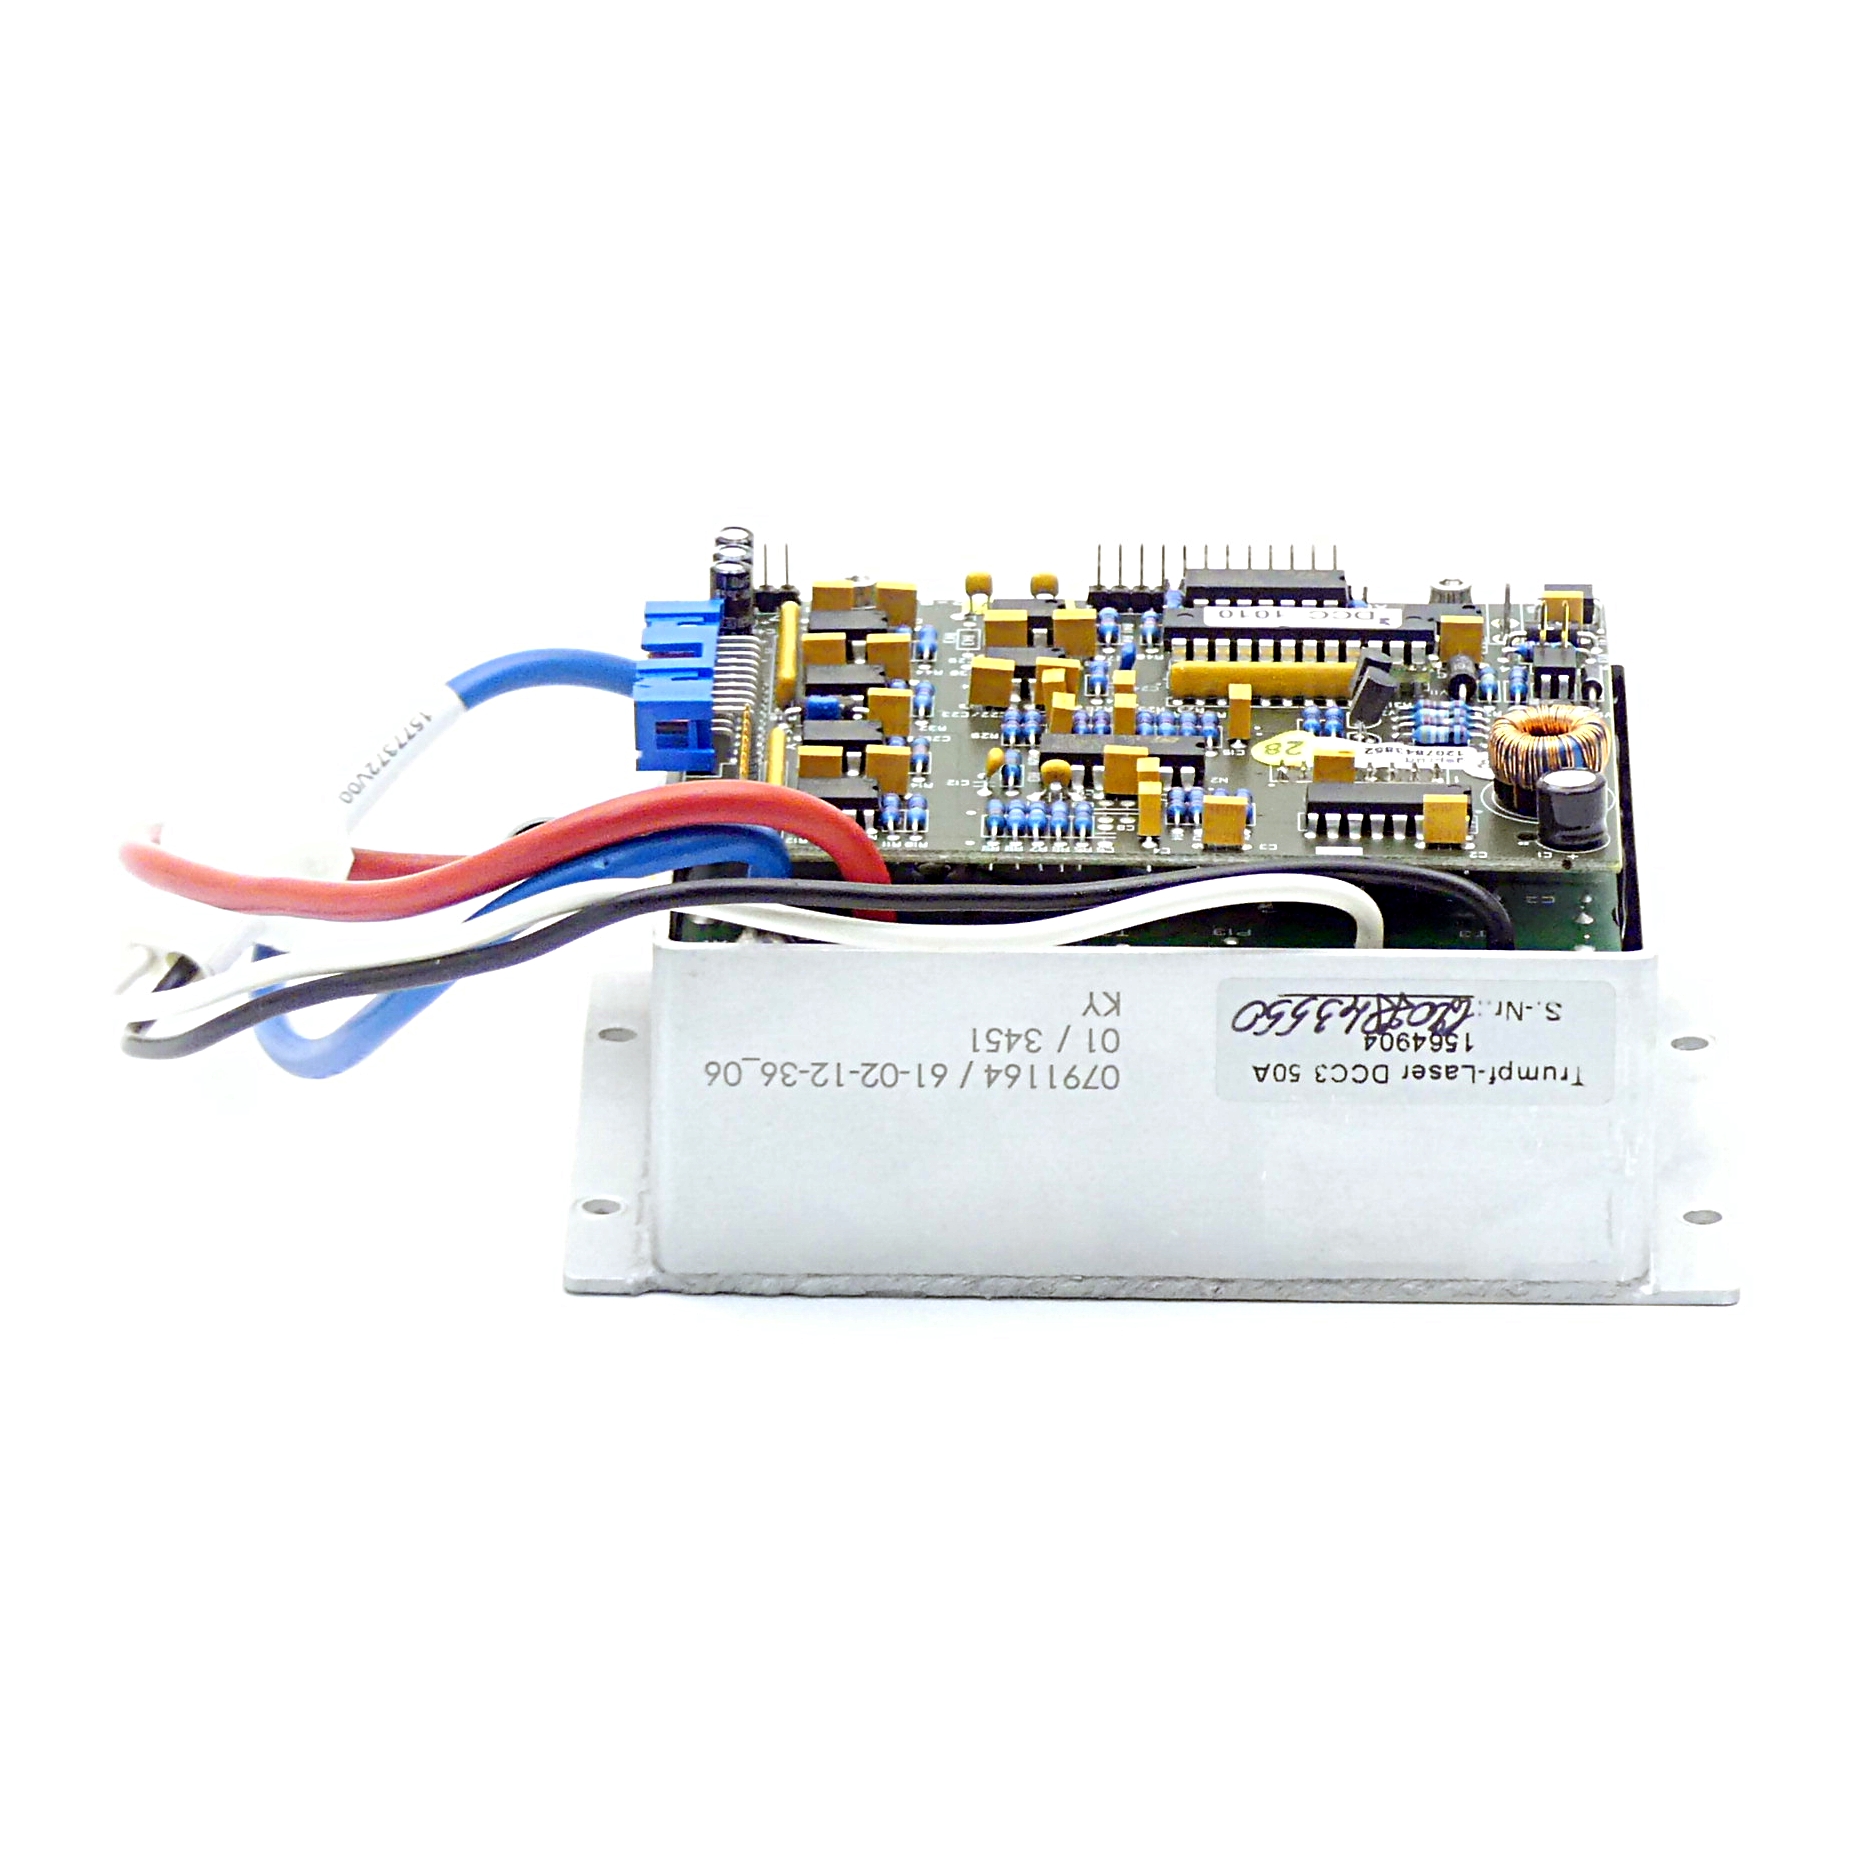 Laser diode controller module DCC3 